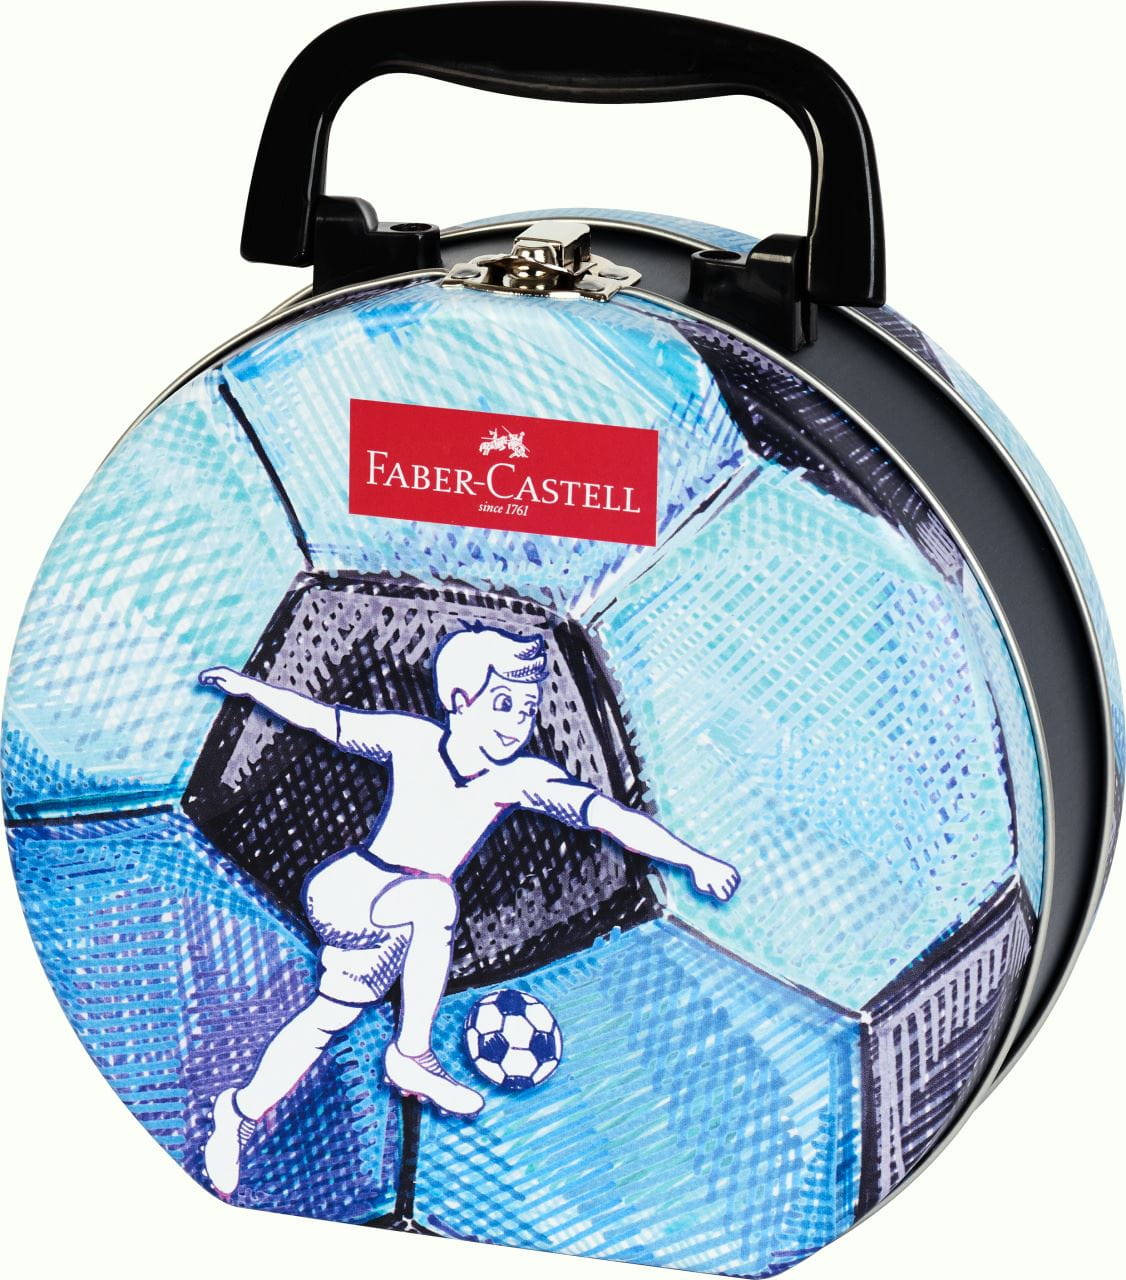 Faber-Castell - Pennarelli Connector valigetta Calciatore